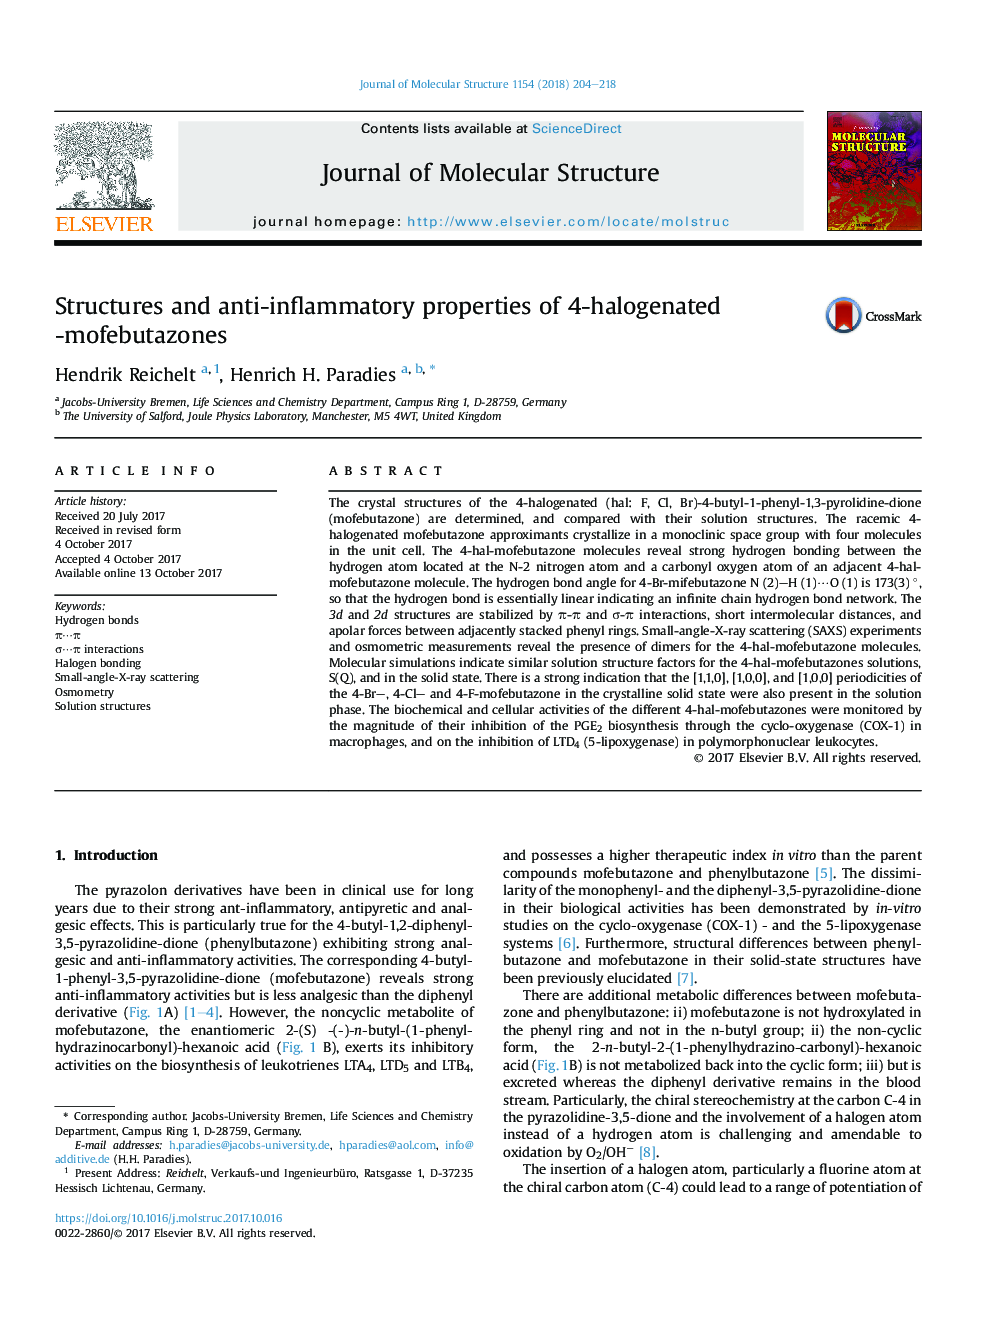 Structures and anti-inflammatory properties of 4-halogenated -mofebutazones